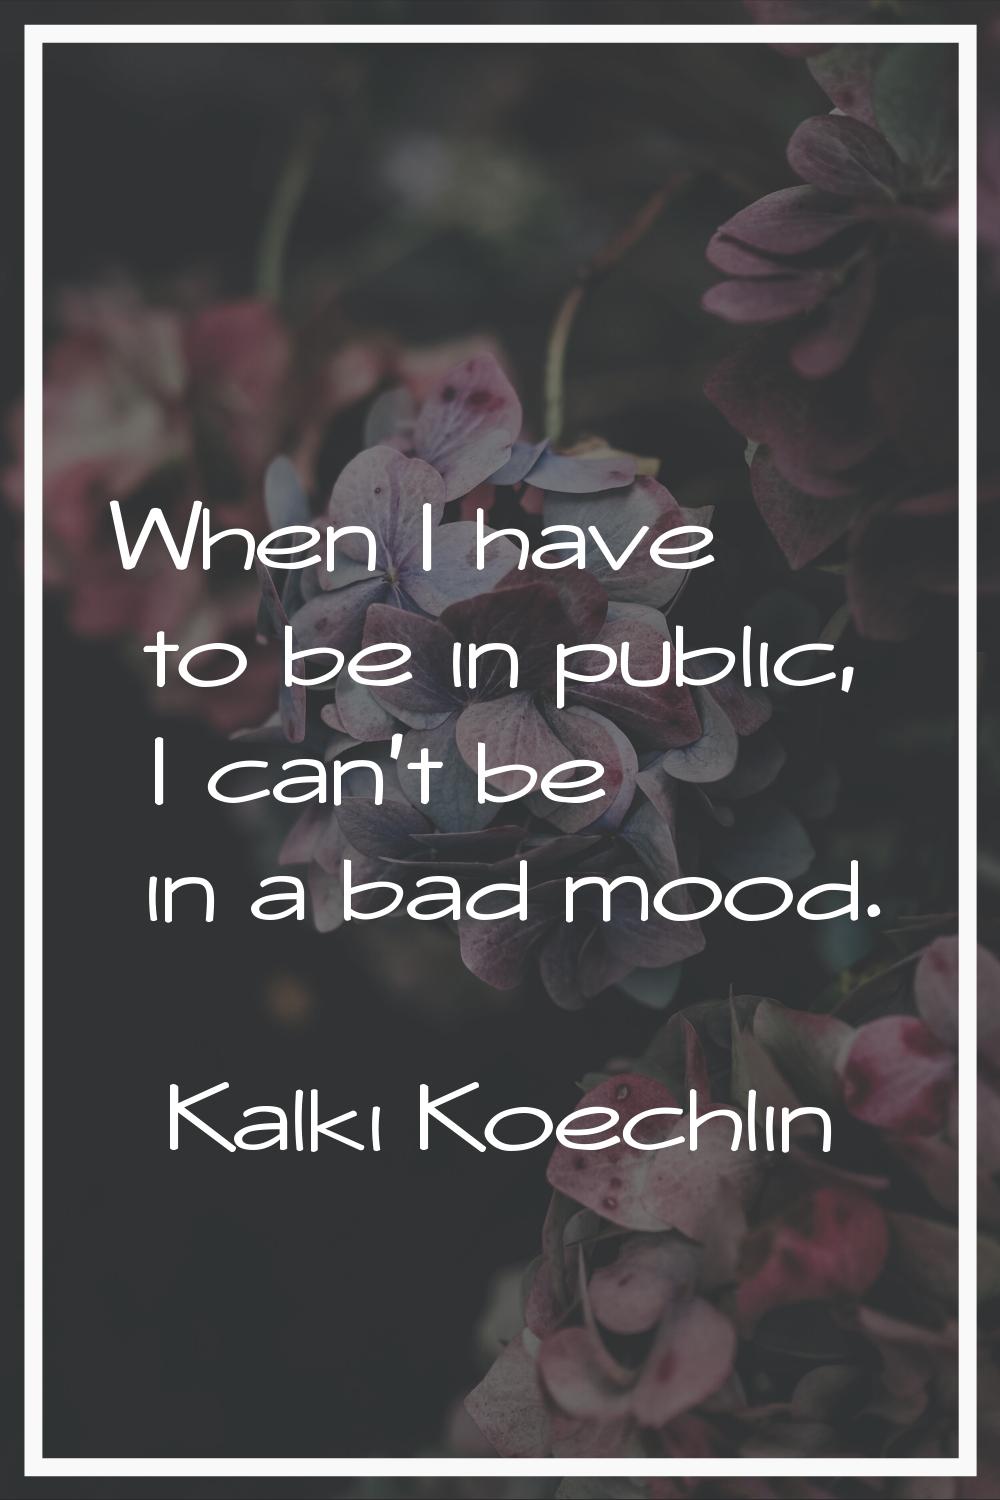 When I have to be in public, I can't be in a bad mood.